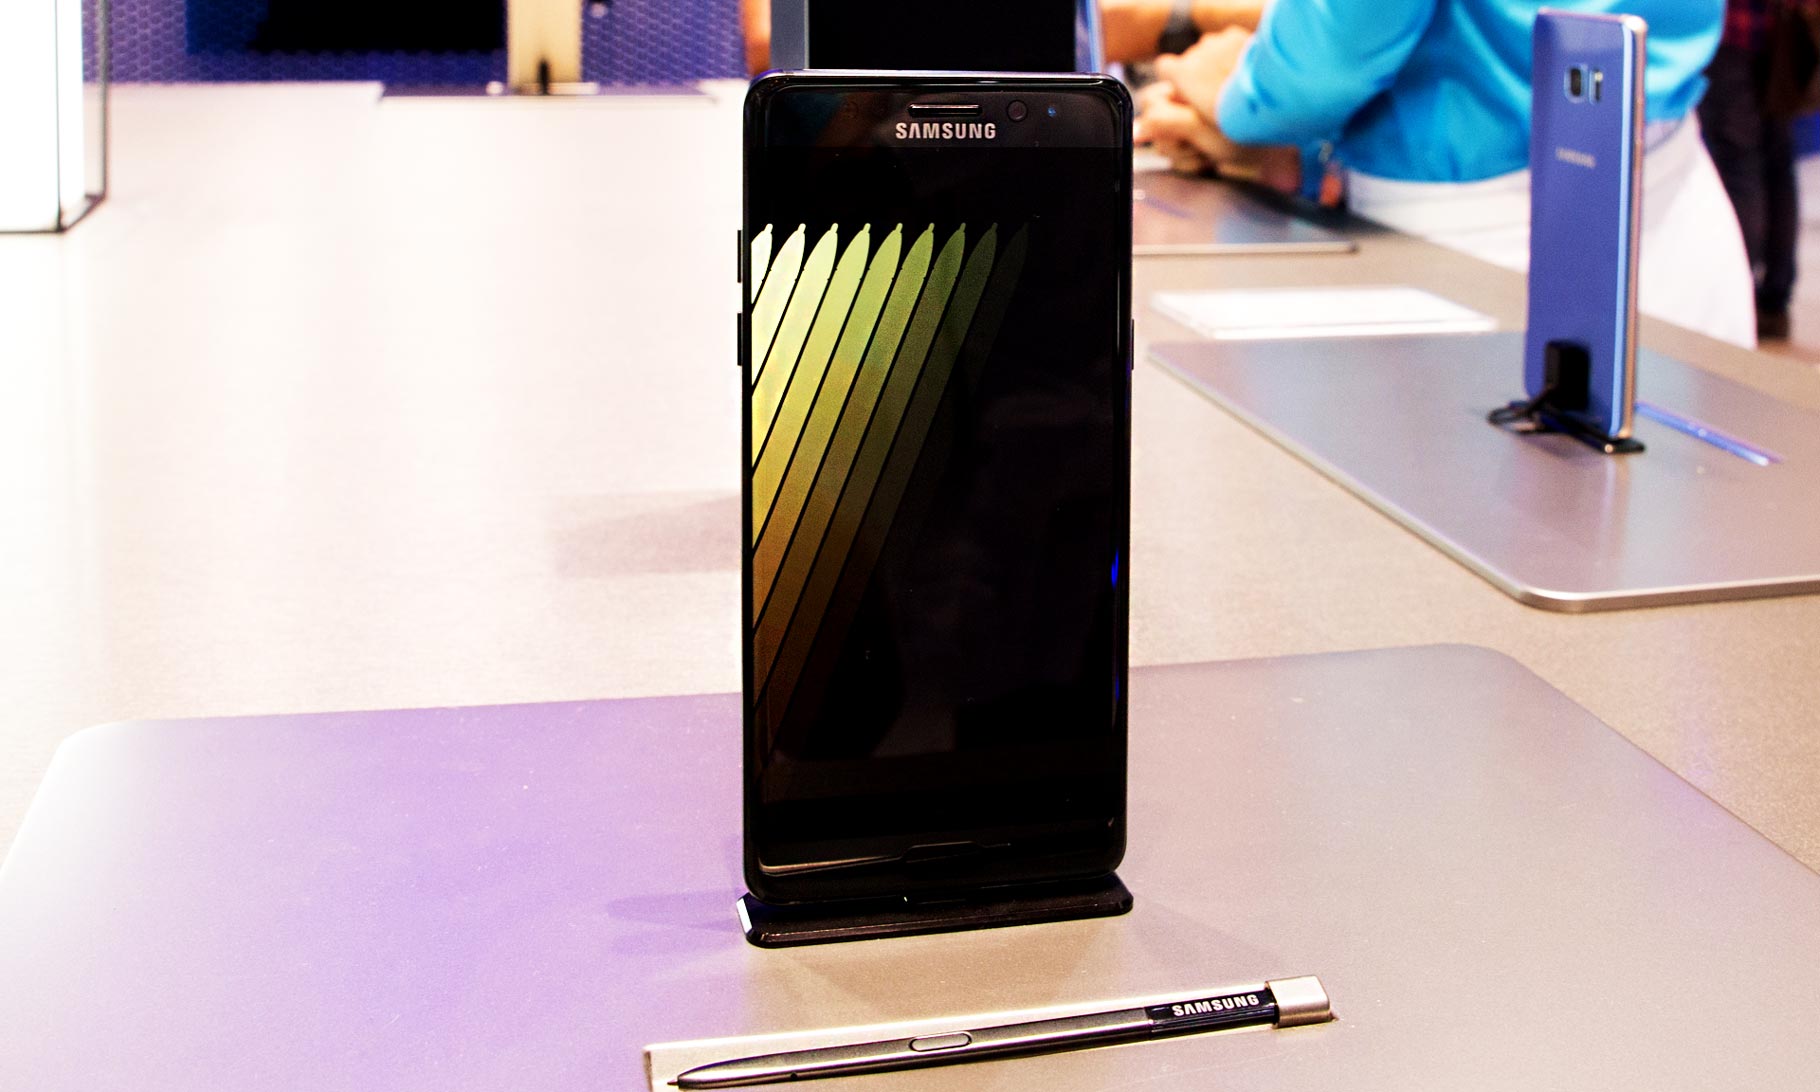 Samsung Galaxy Note 7 refurbished